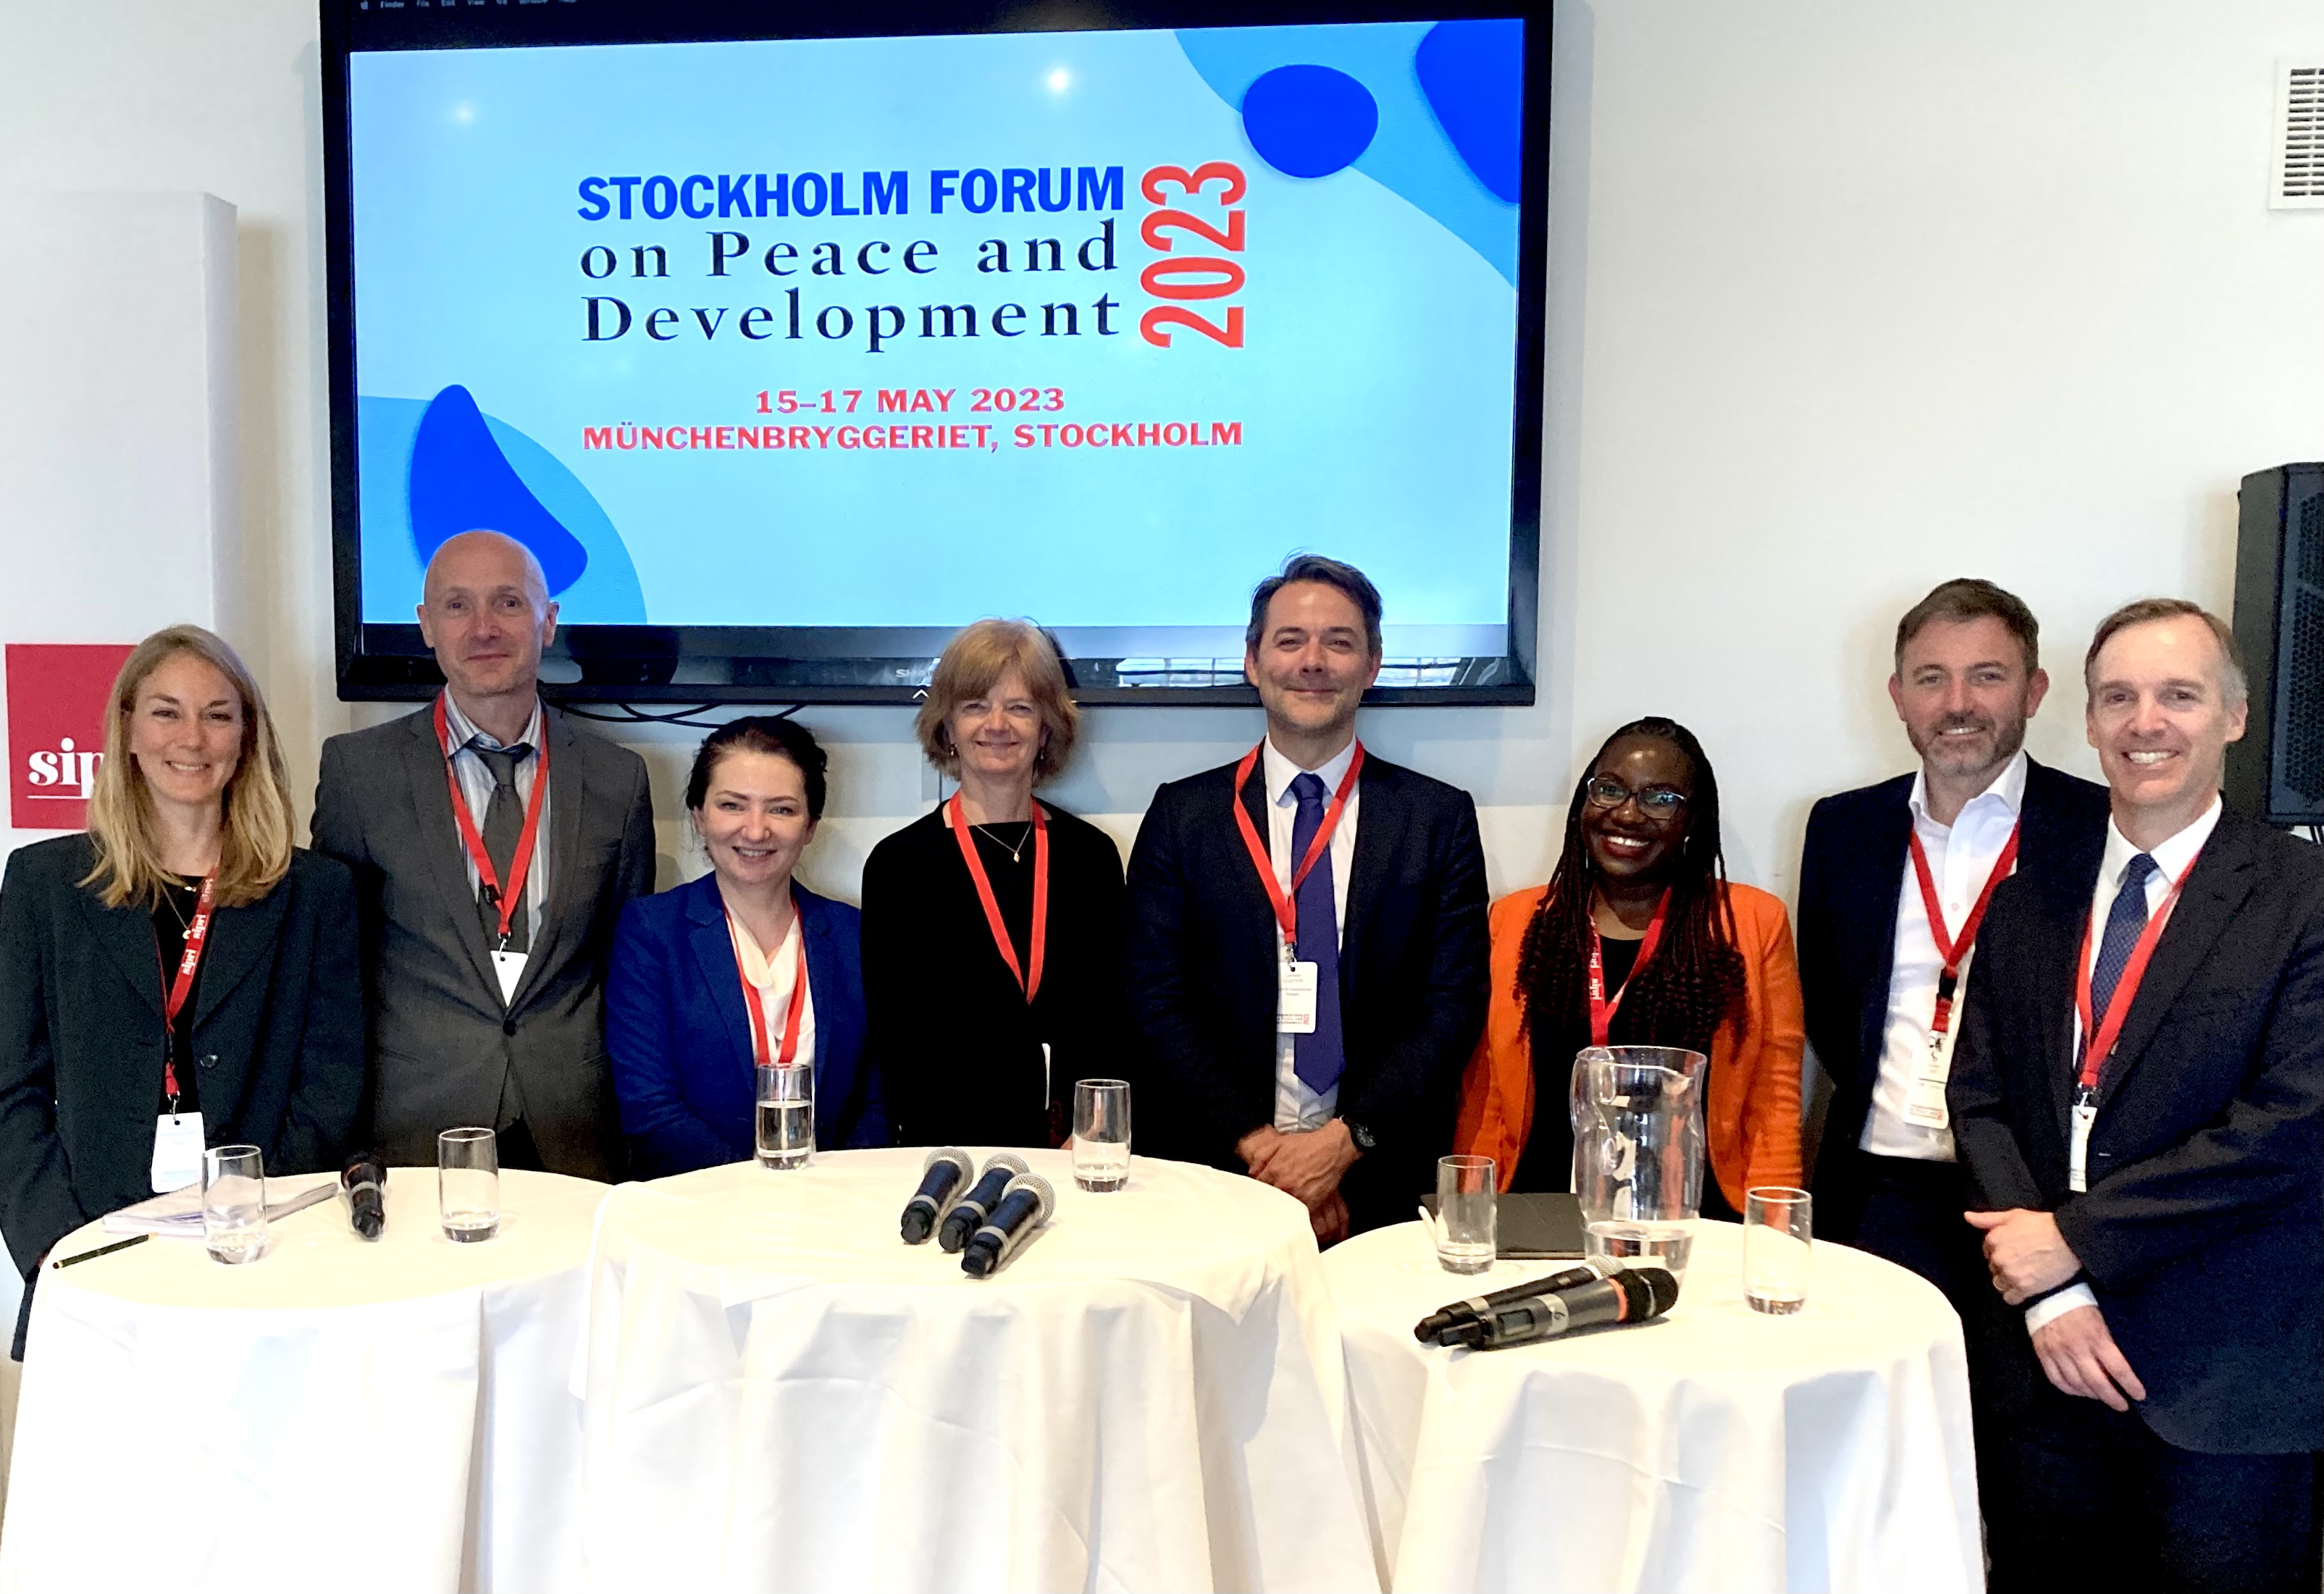 Image of EUISS participants at Stockholm Forum © EUISS